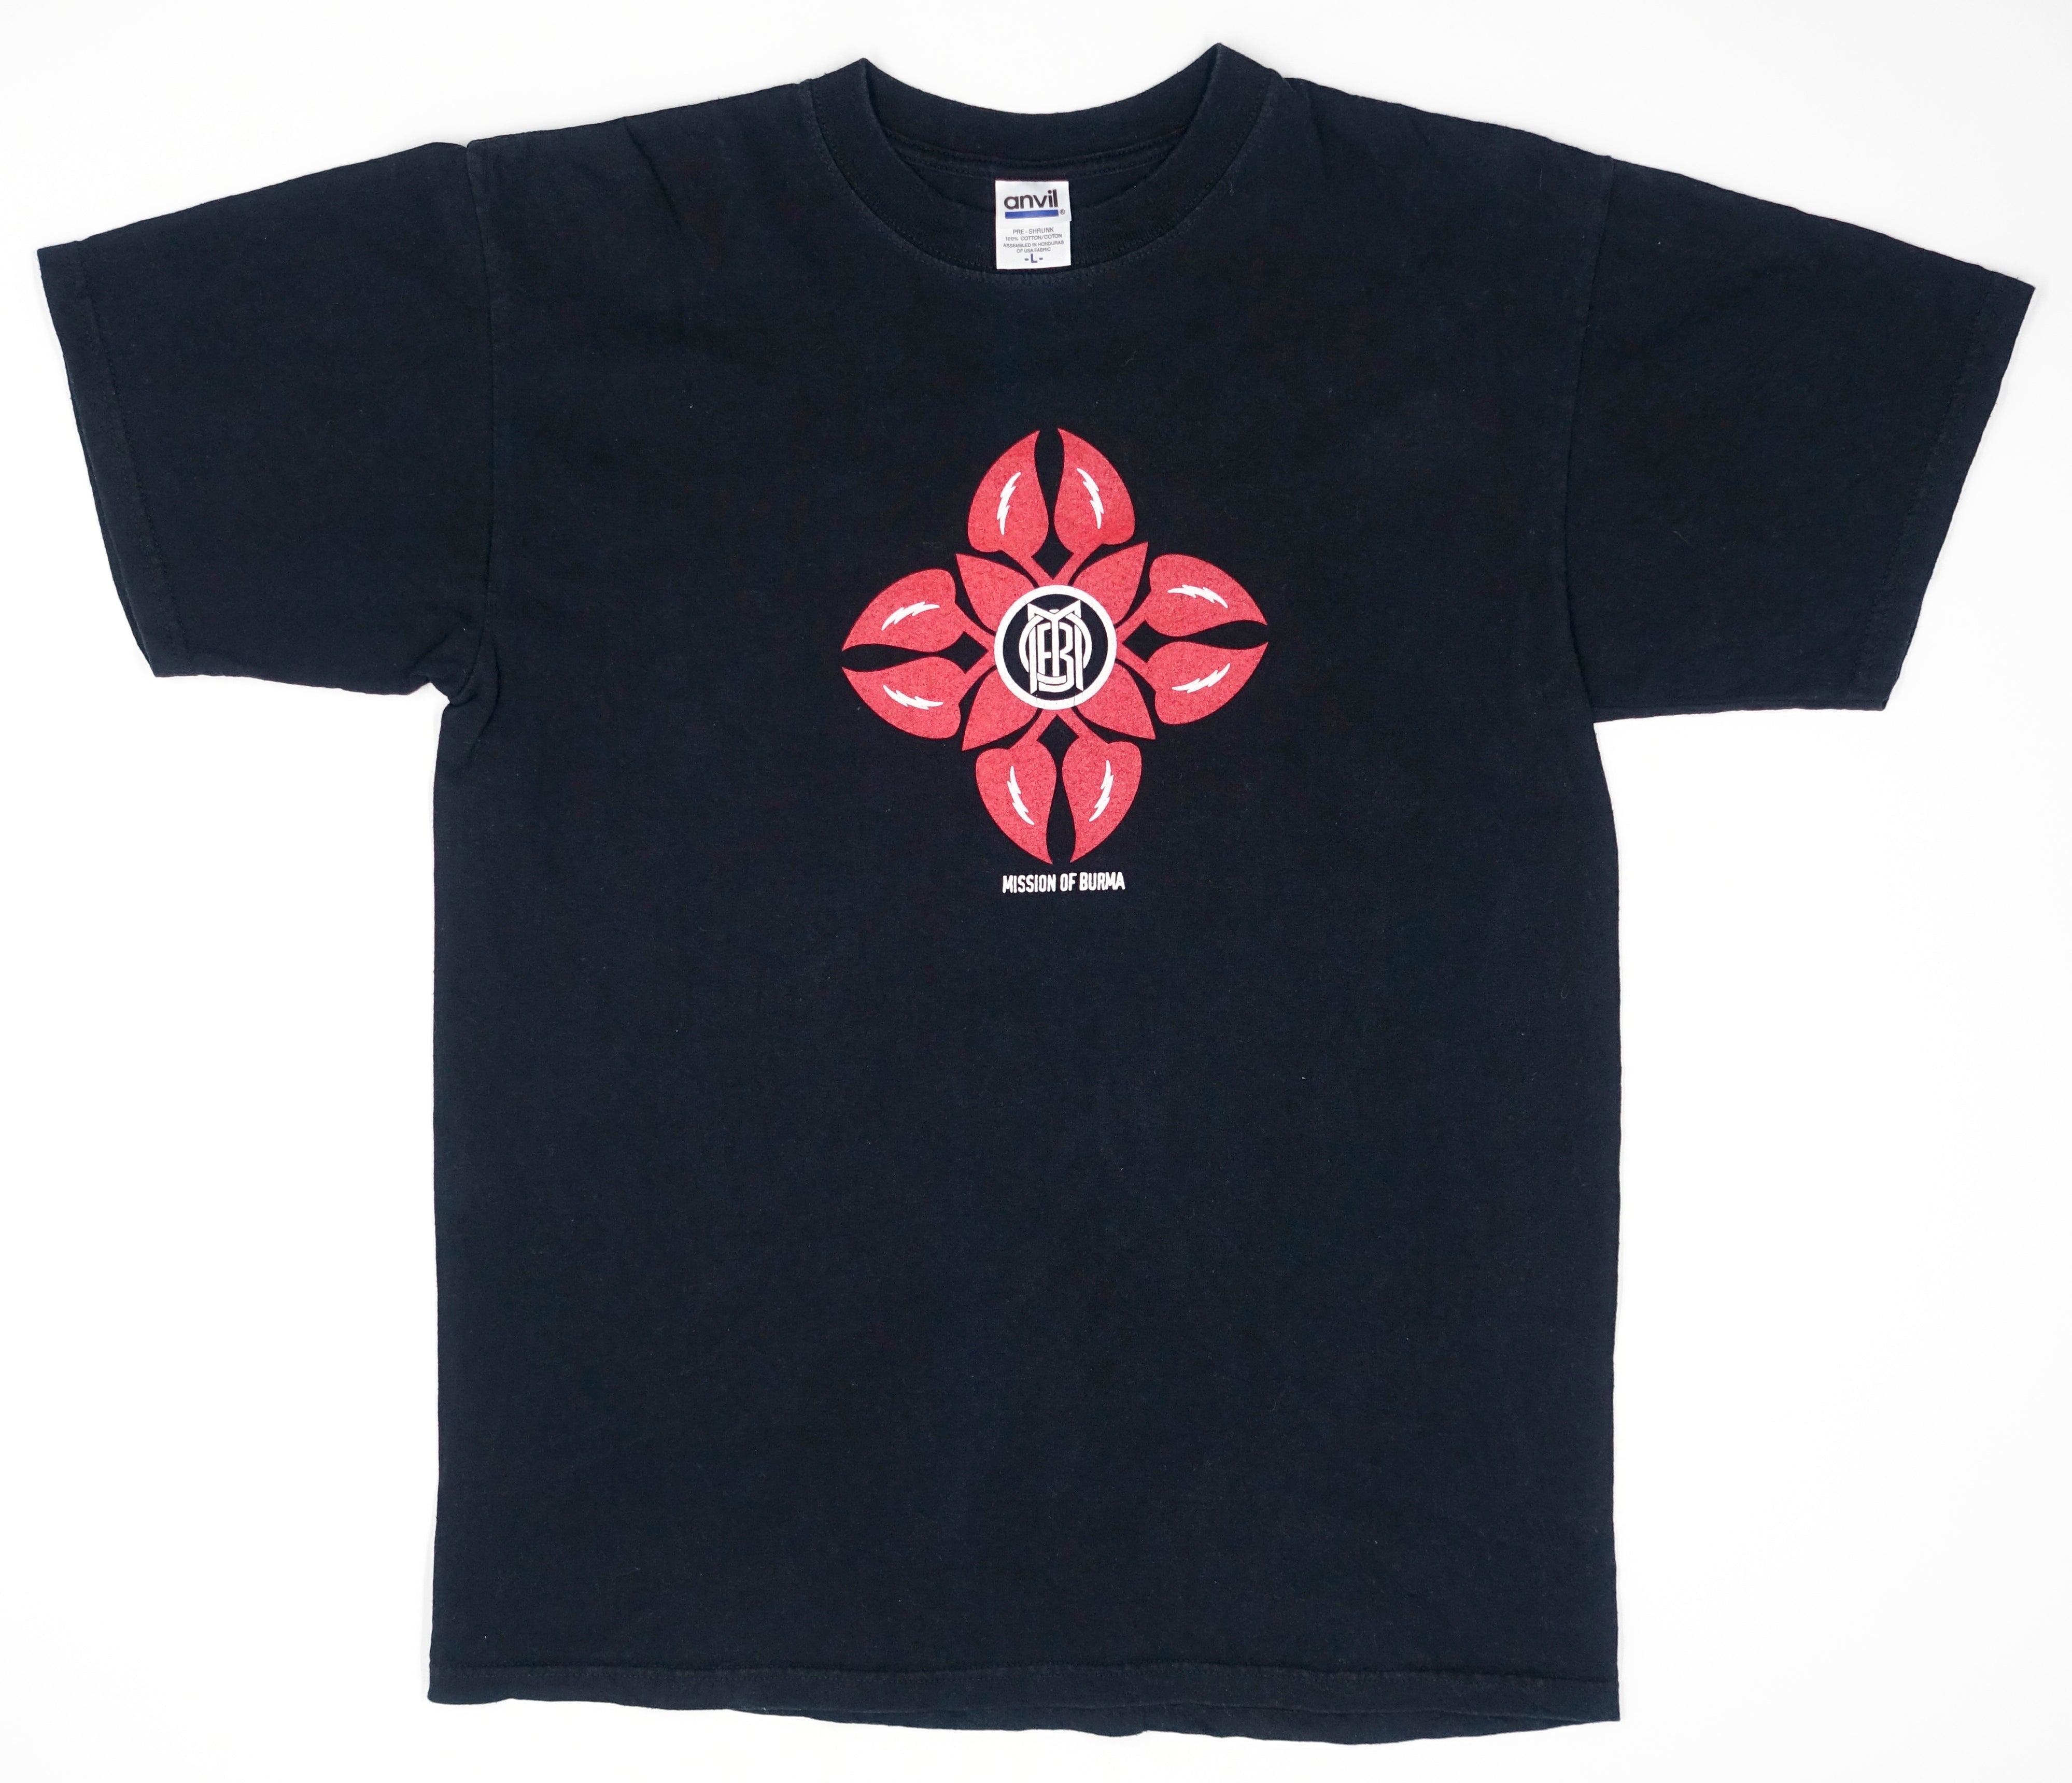 Mission Of Burma – Flower 2012 Tour Shirt Size Large